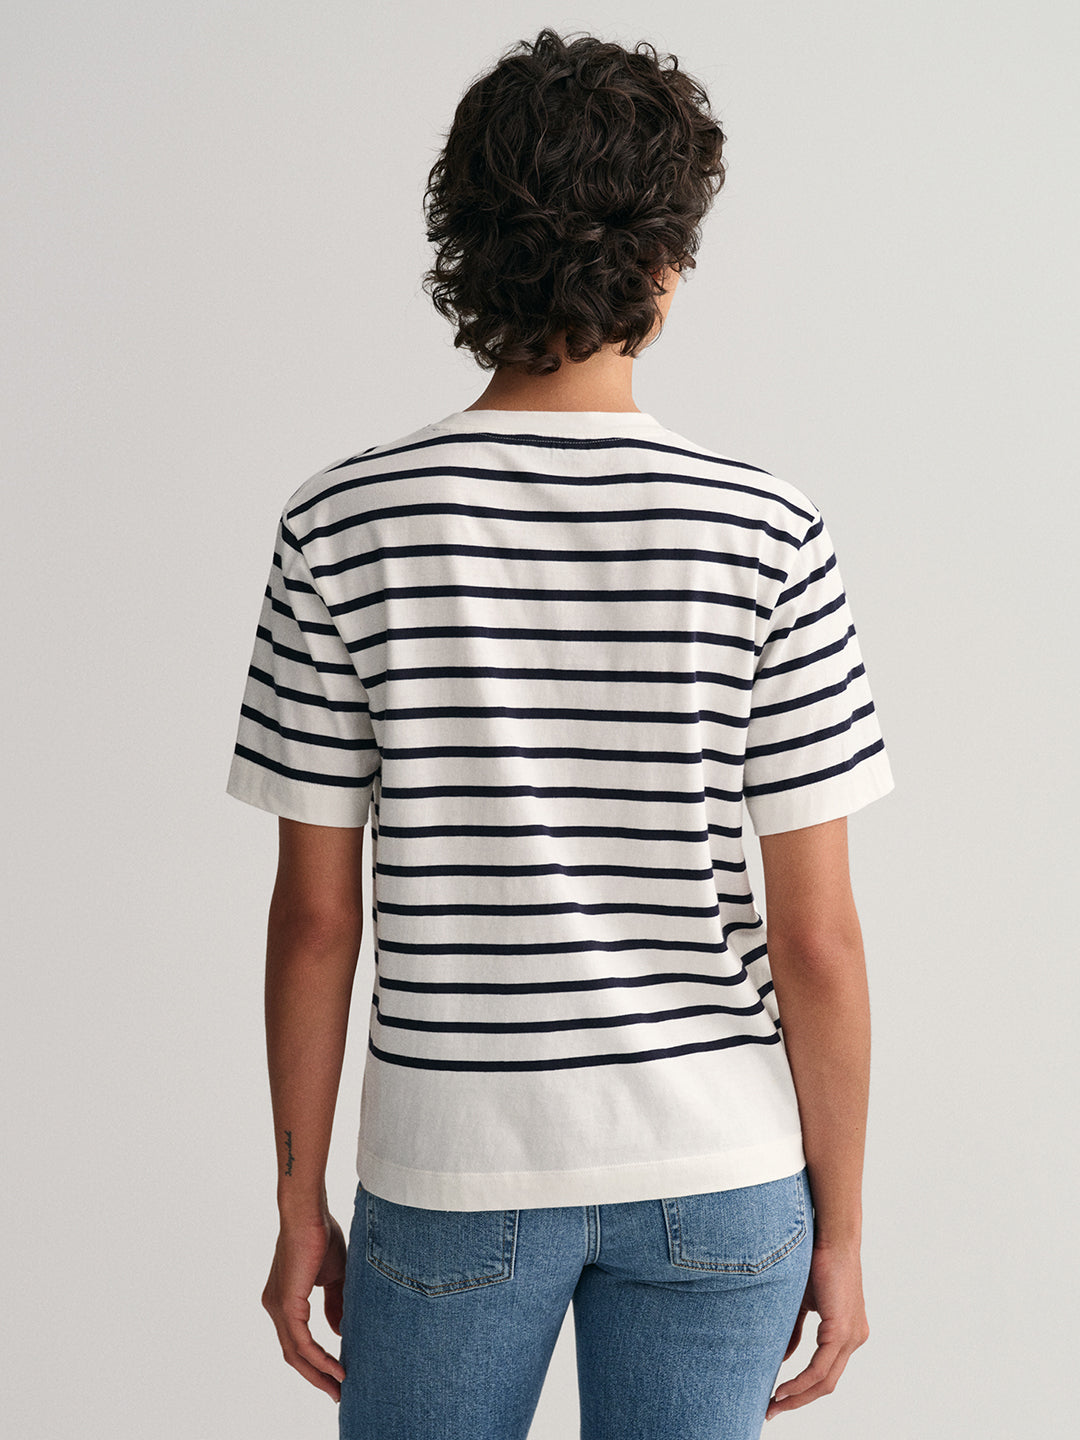 Gant Striped Pure Cotton T-shirt